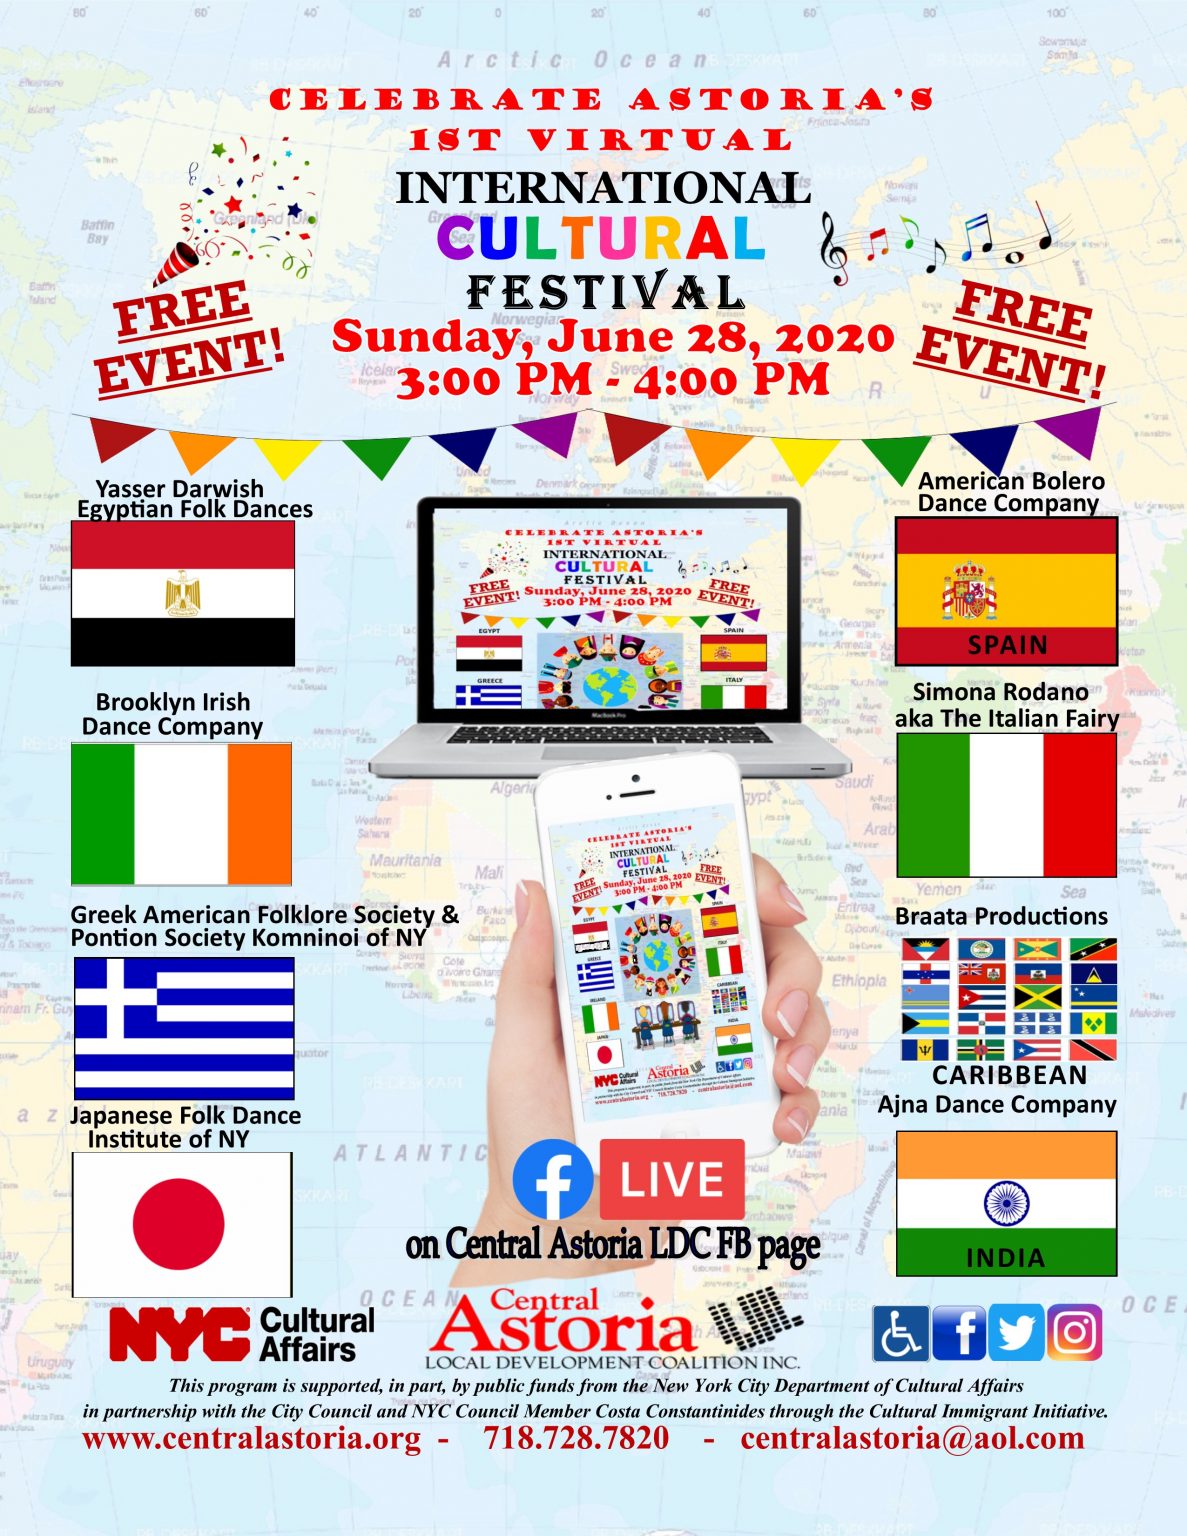 Celebrating Astoria's First Virtual International Cultural Festival